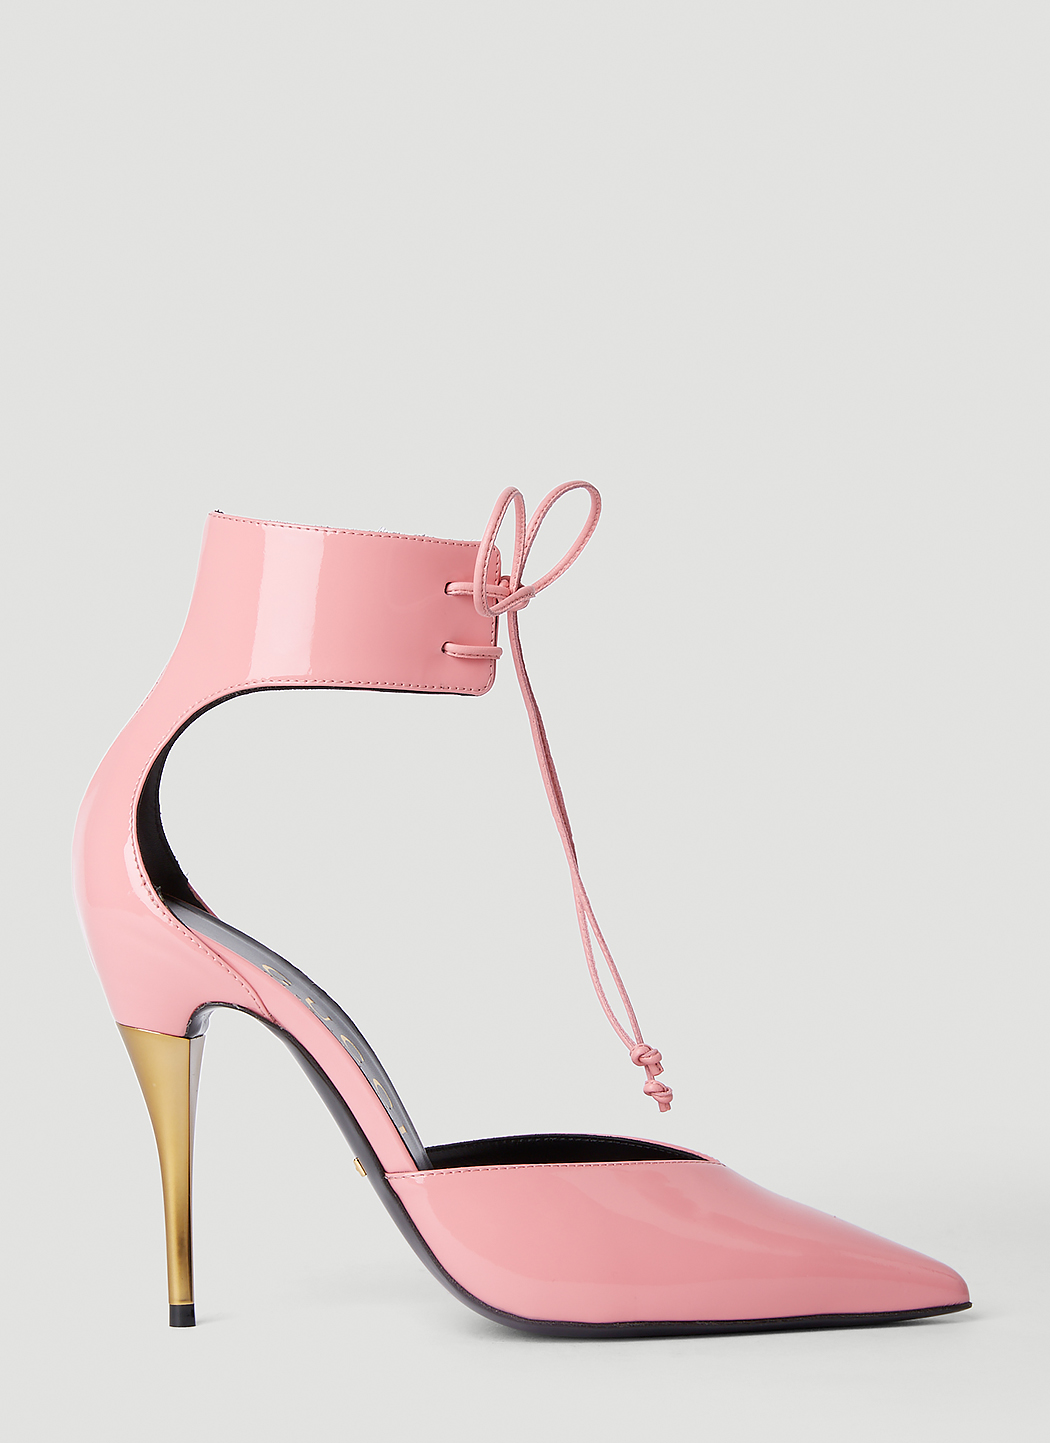 Gucci Patent High Heel Pumps in Pink | LN-CC